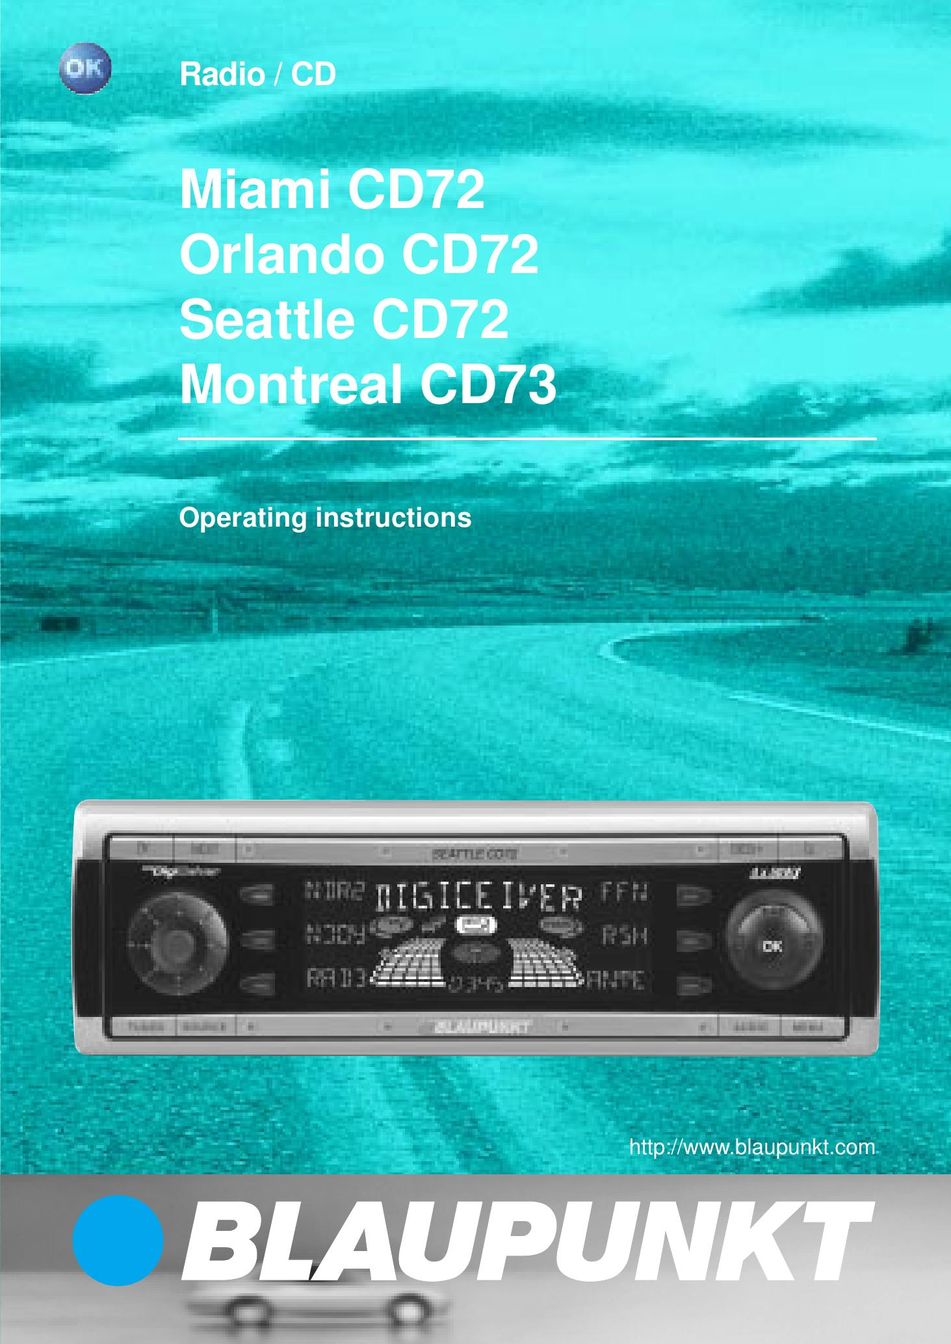 Blaupunkt Orlando CD72 Portable Radio User Manual